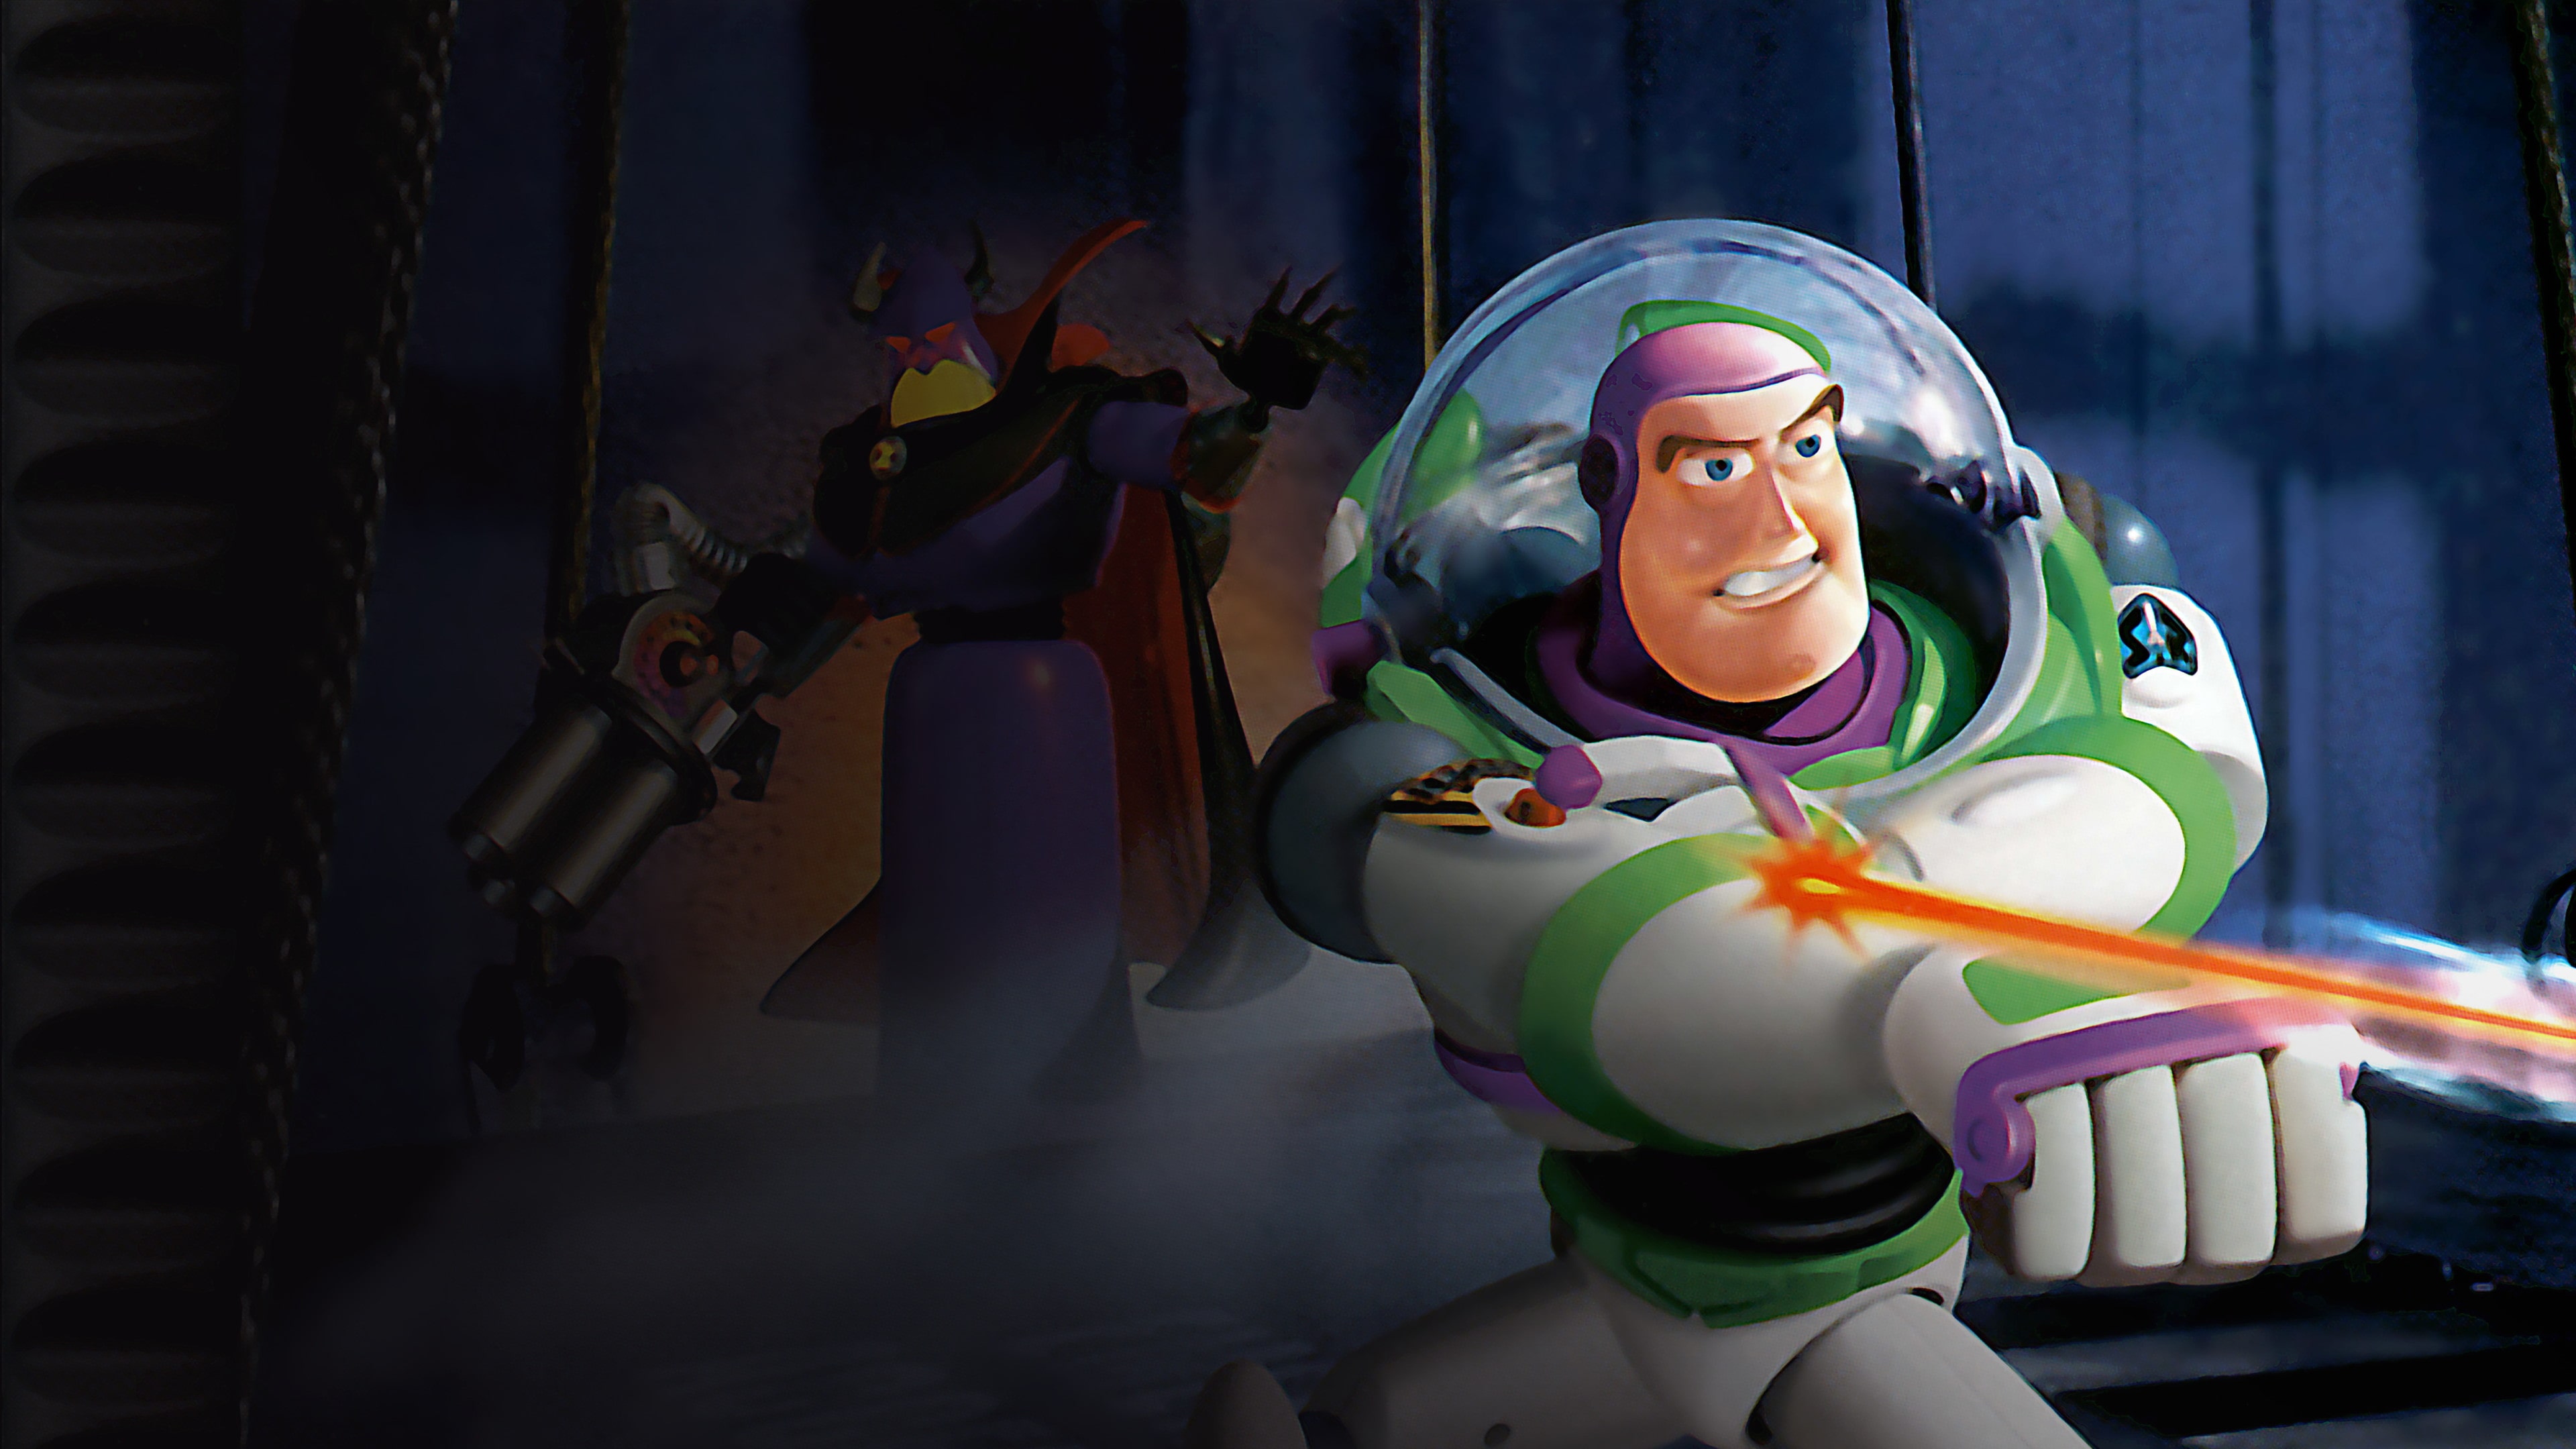 Disney•Pixar Toy Story 2: Buzz Lightyear to the Rescue!